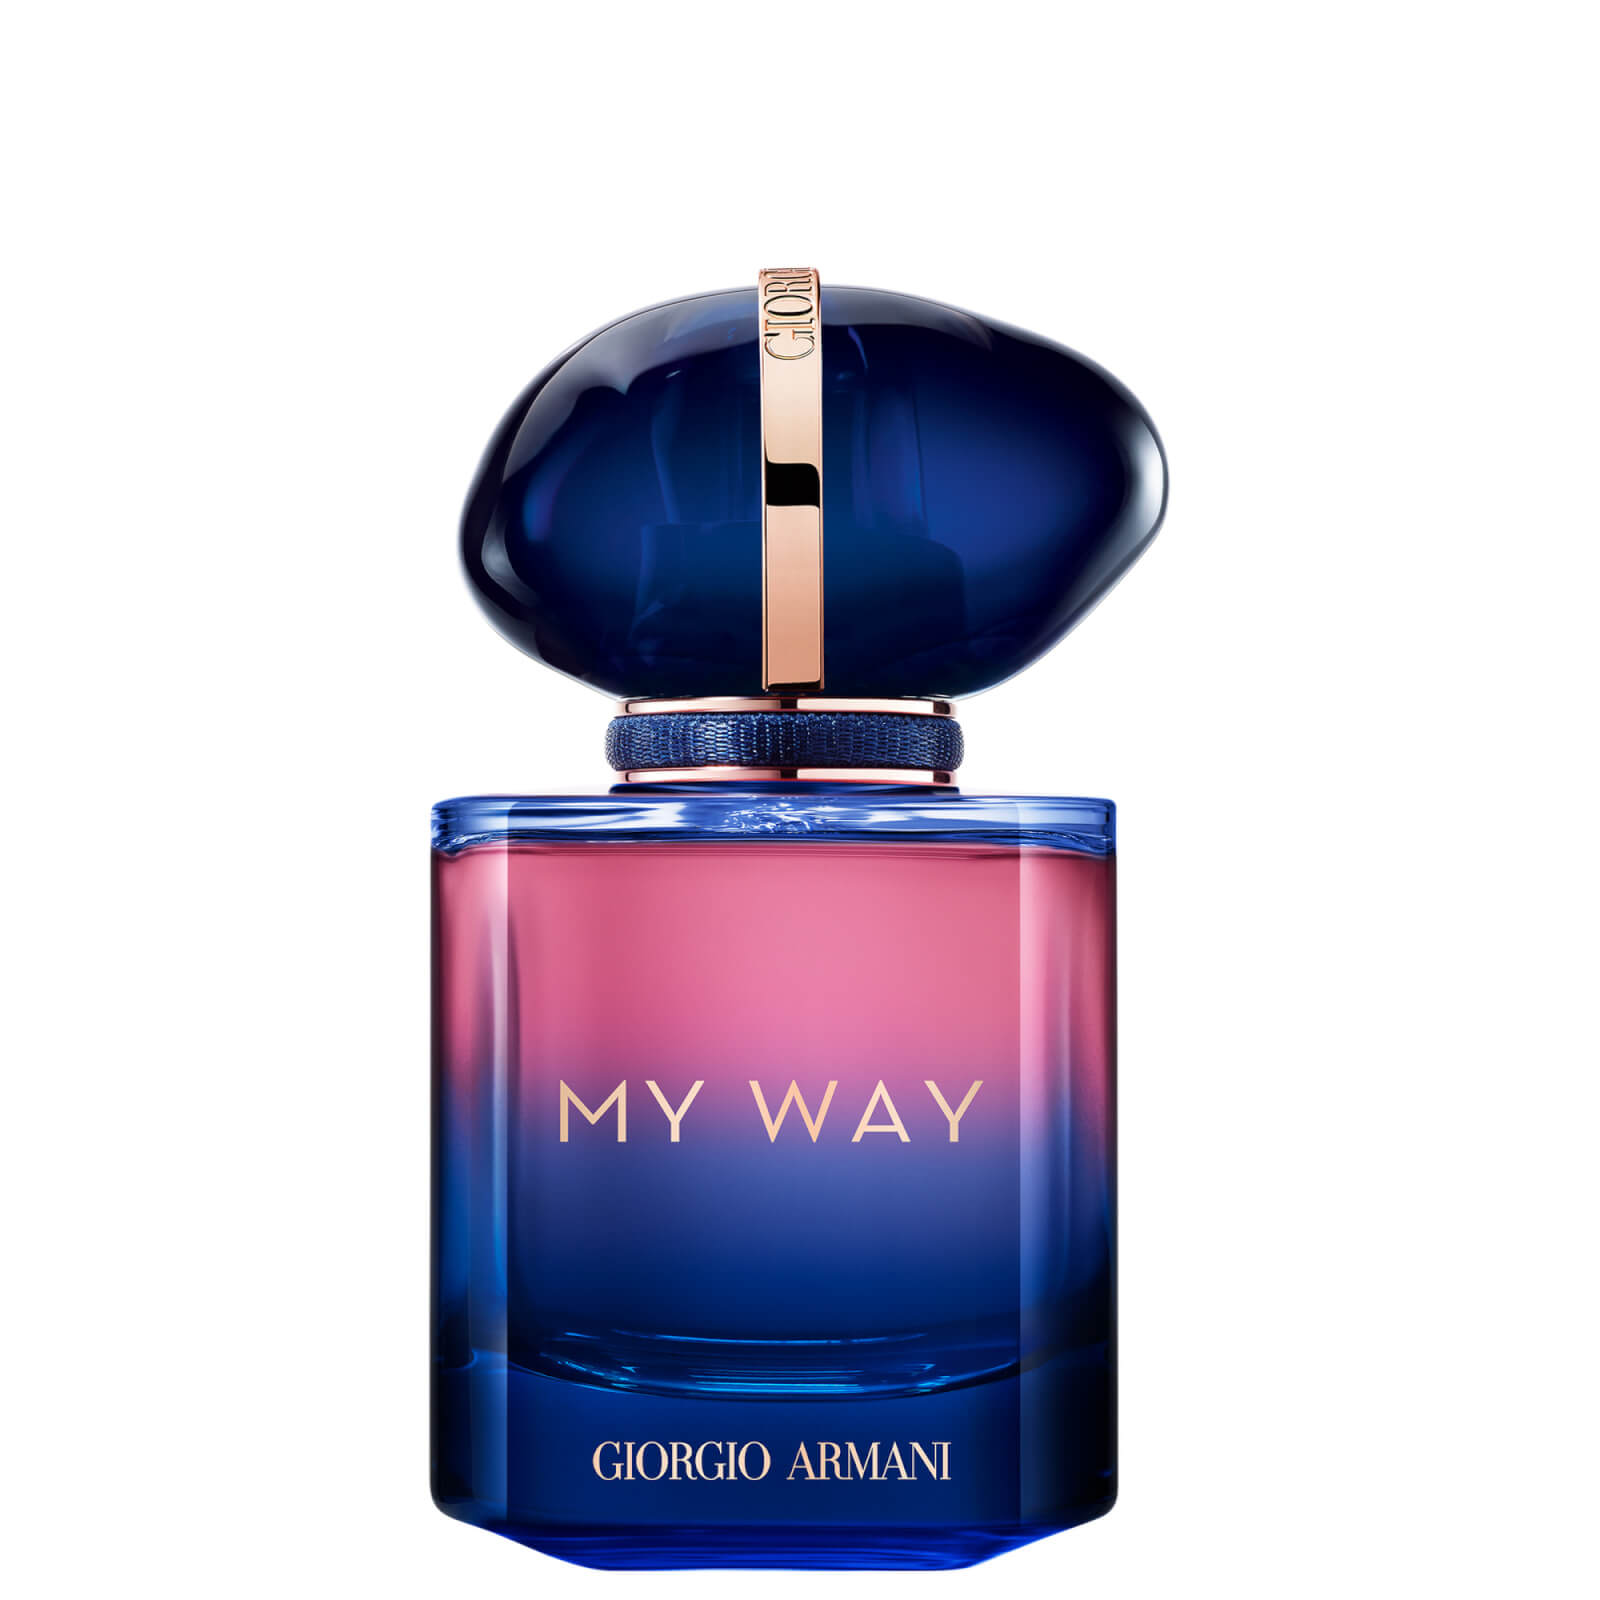 Giorgio Armani My Way Parfum 30ml product